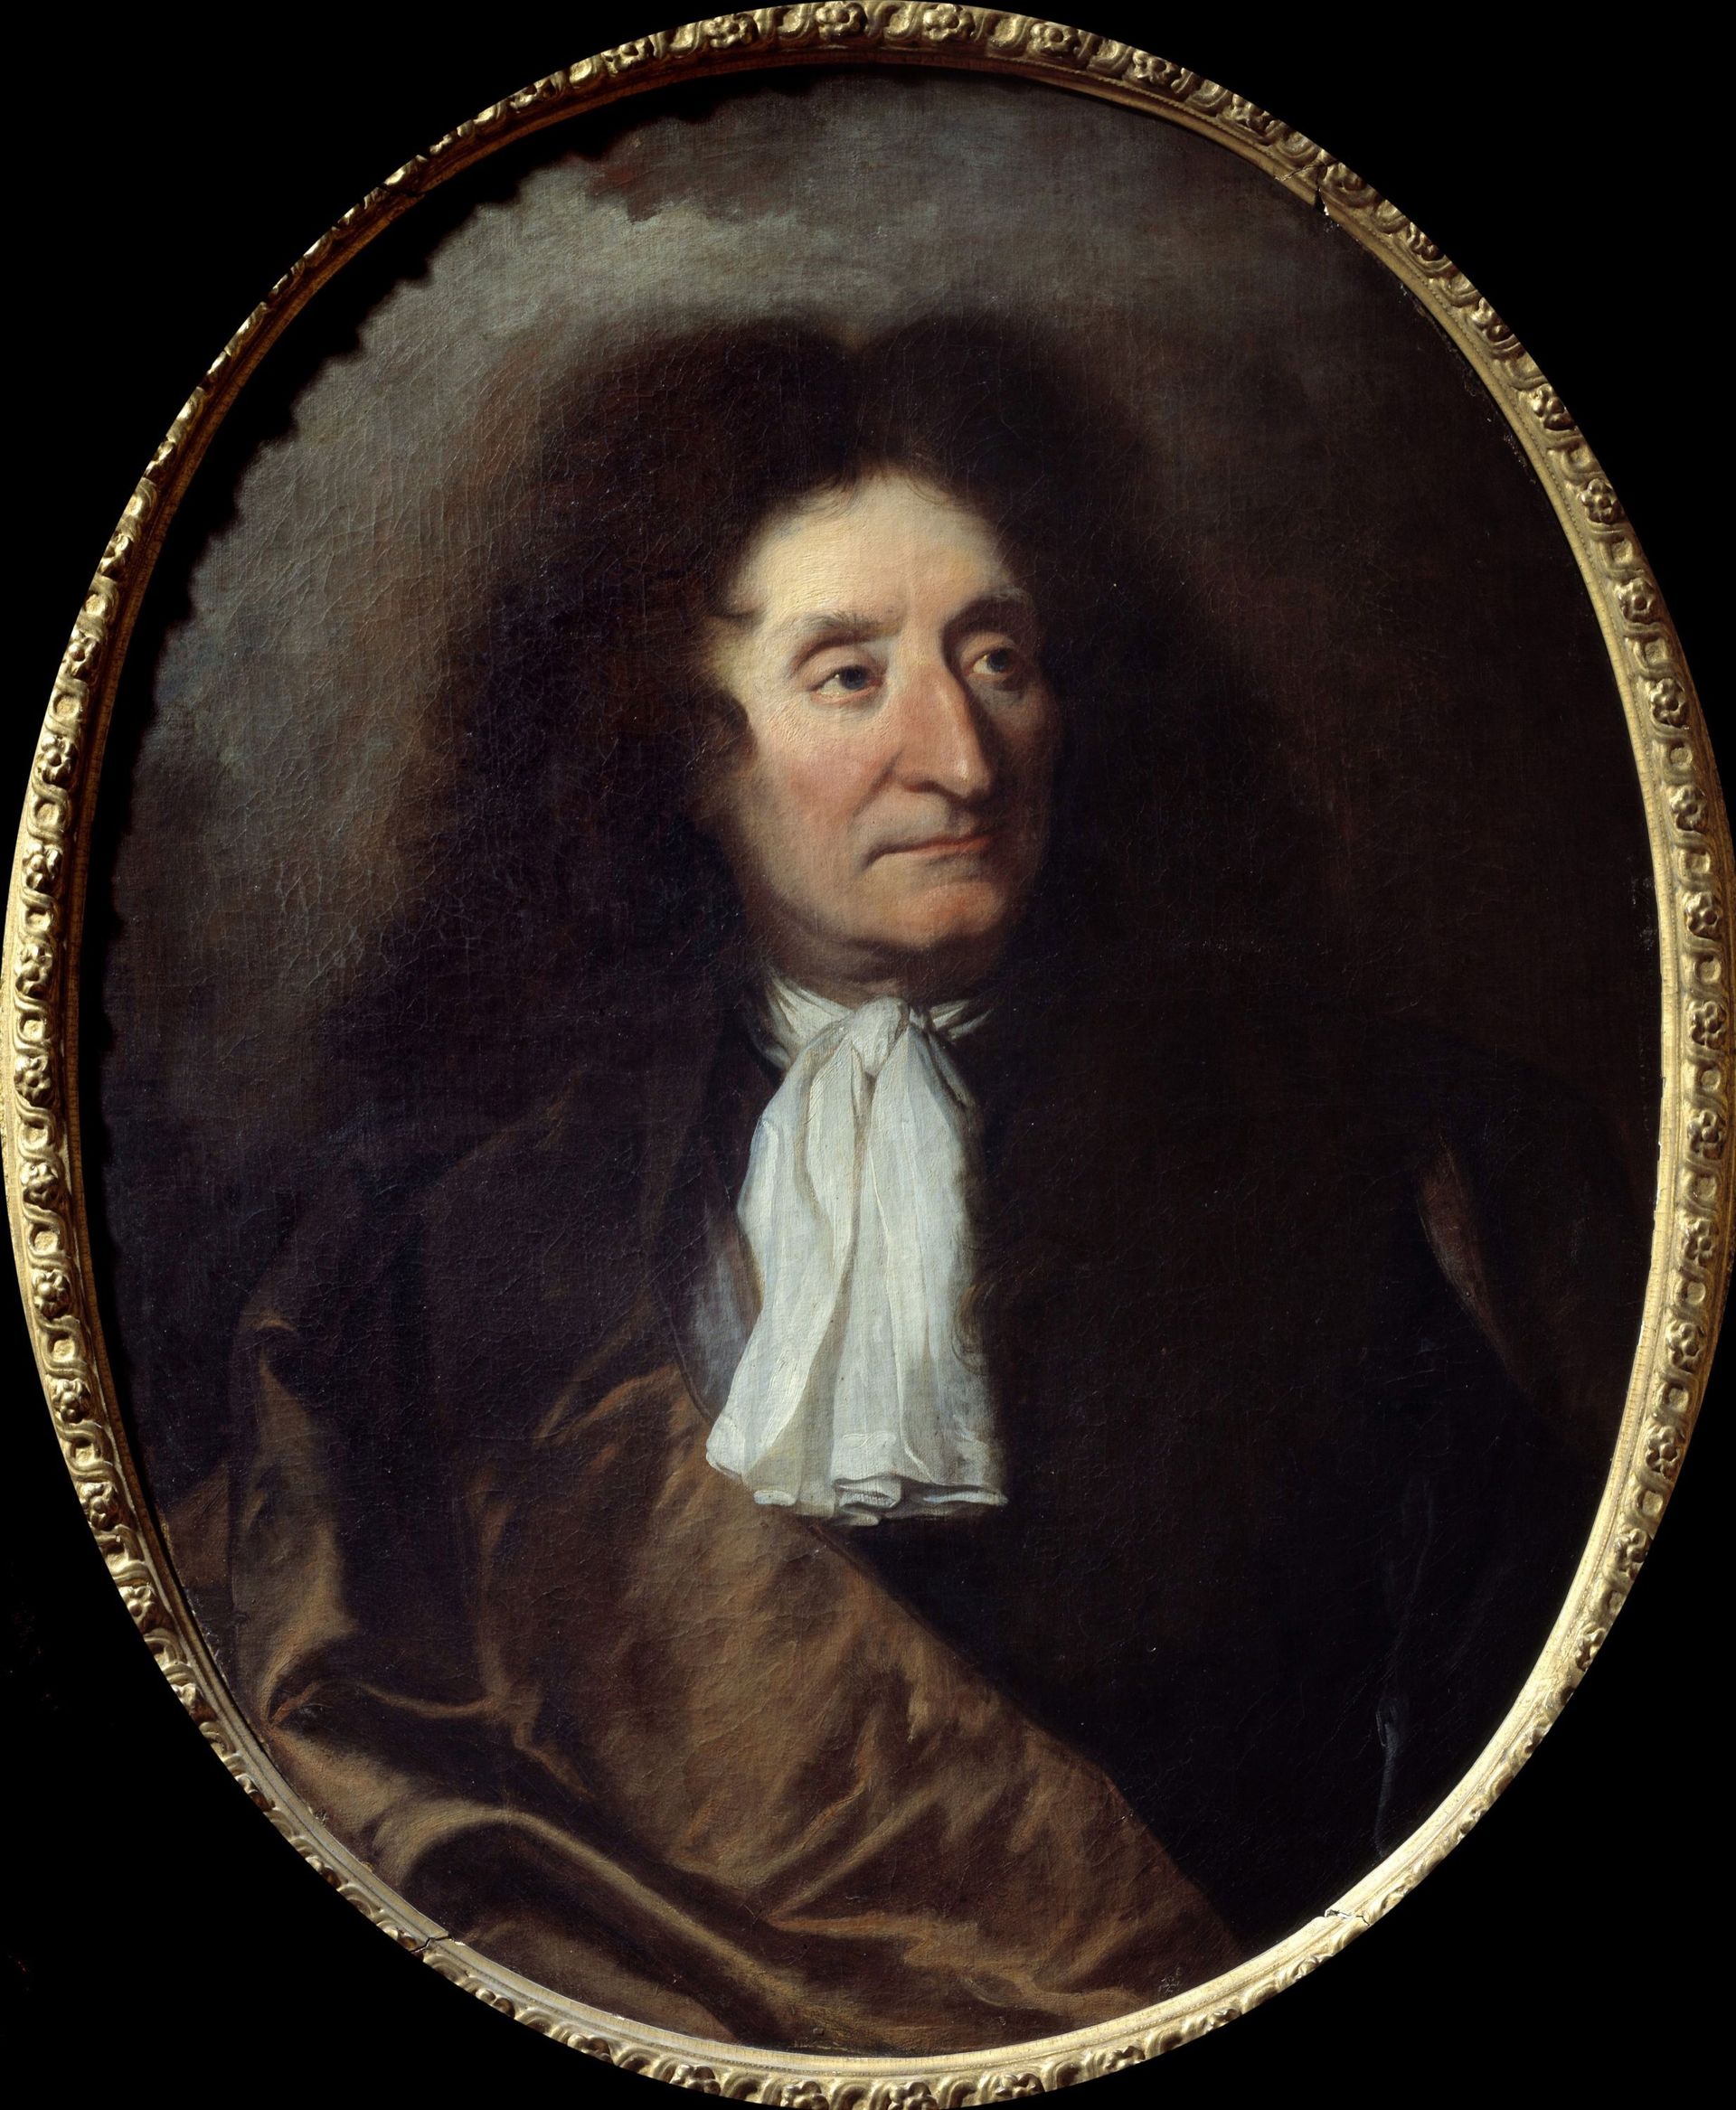 Portrait of Jean de la Fontaine by Hyacinthe Rigaud